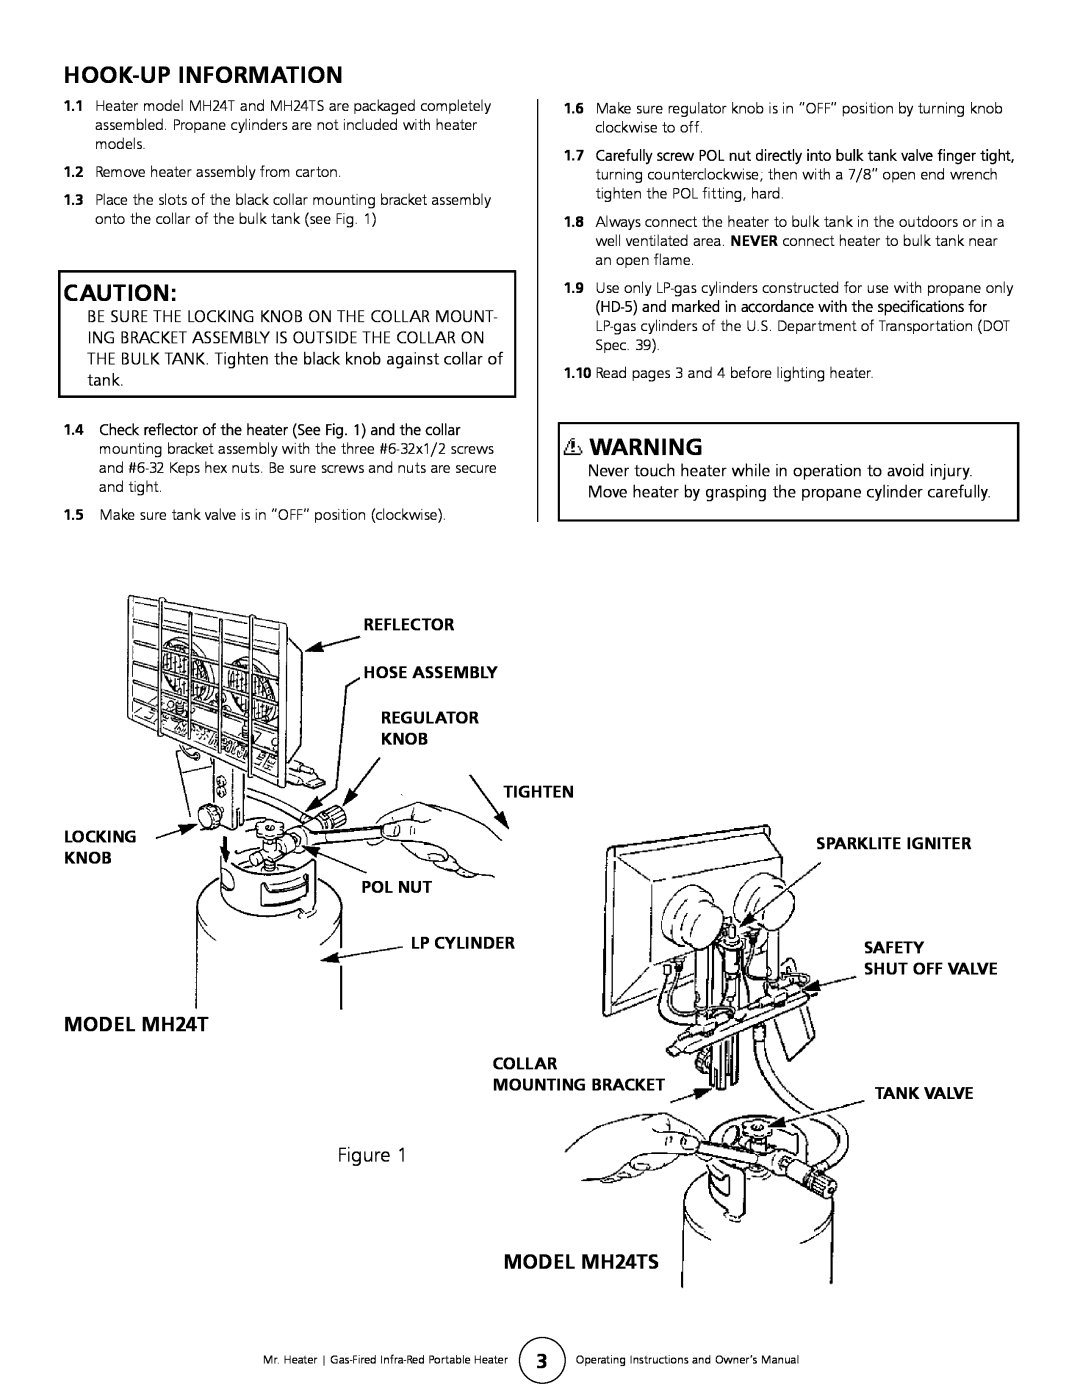 Mr. Heater operating instructions Hook-Upinformation, MODEL MH24TS 